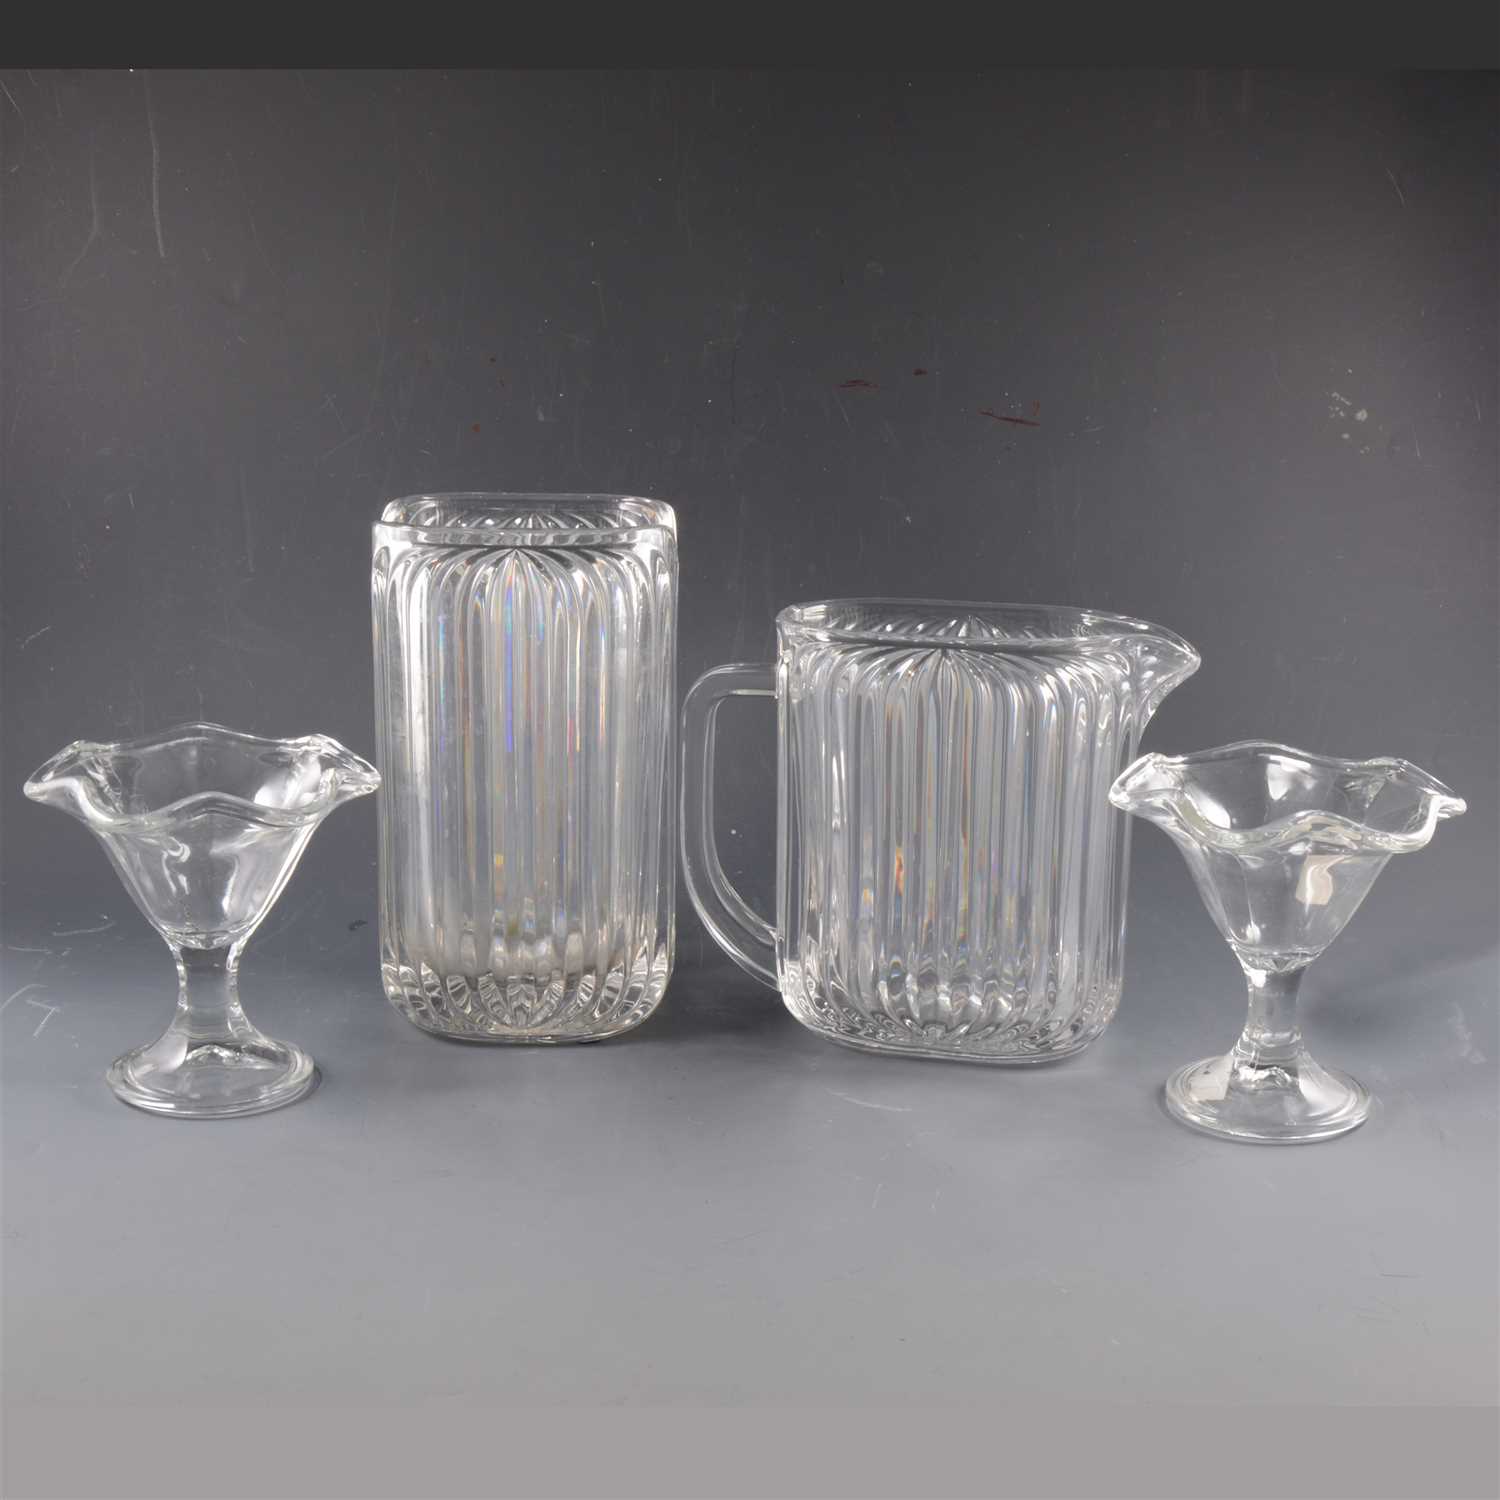 Lot 72 - A quantity of glassware, comprising jugs, glasses, bowls etc.